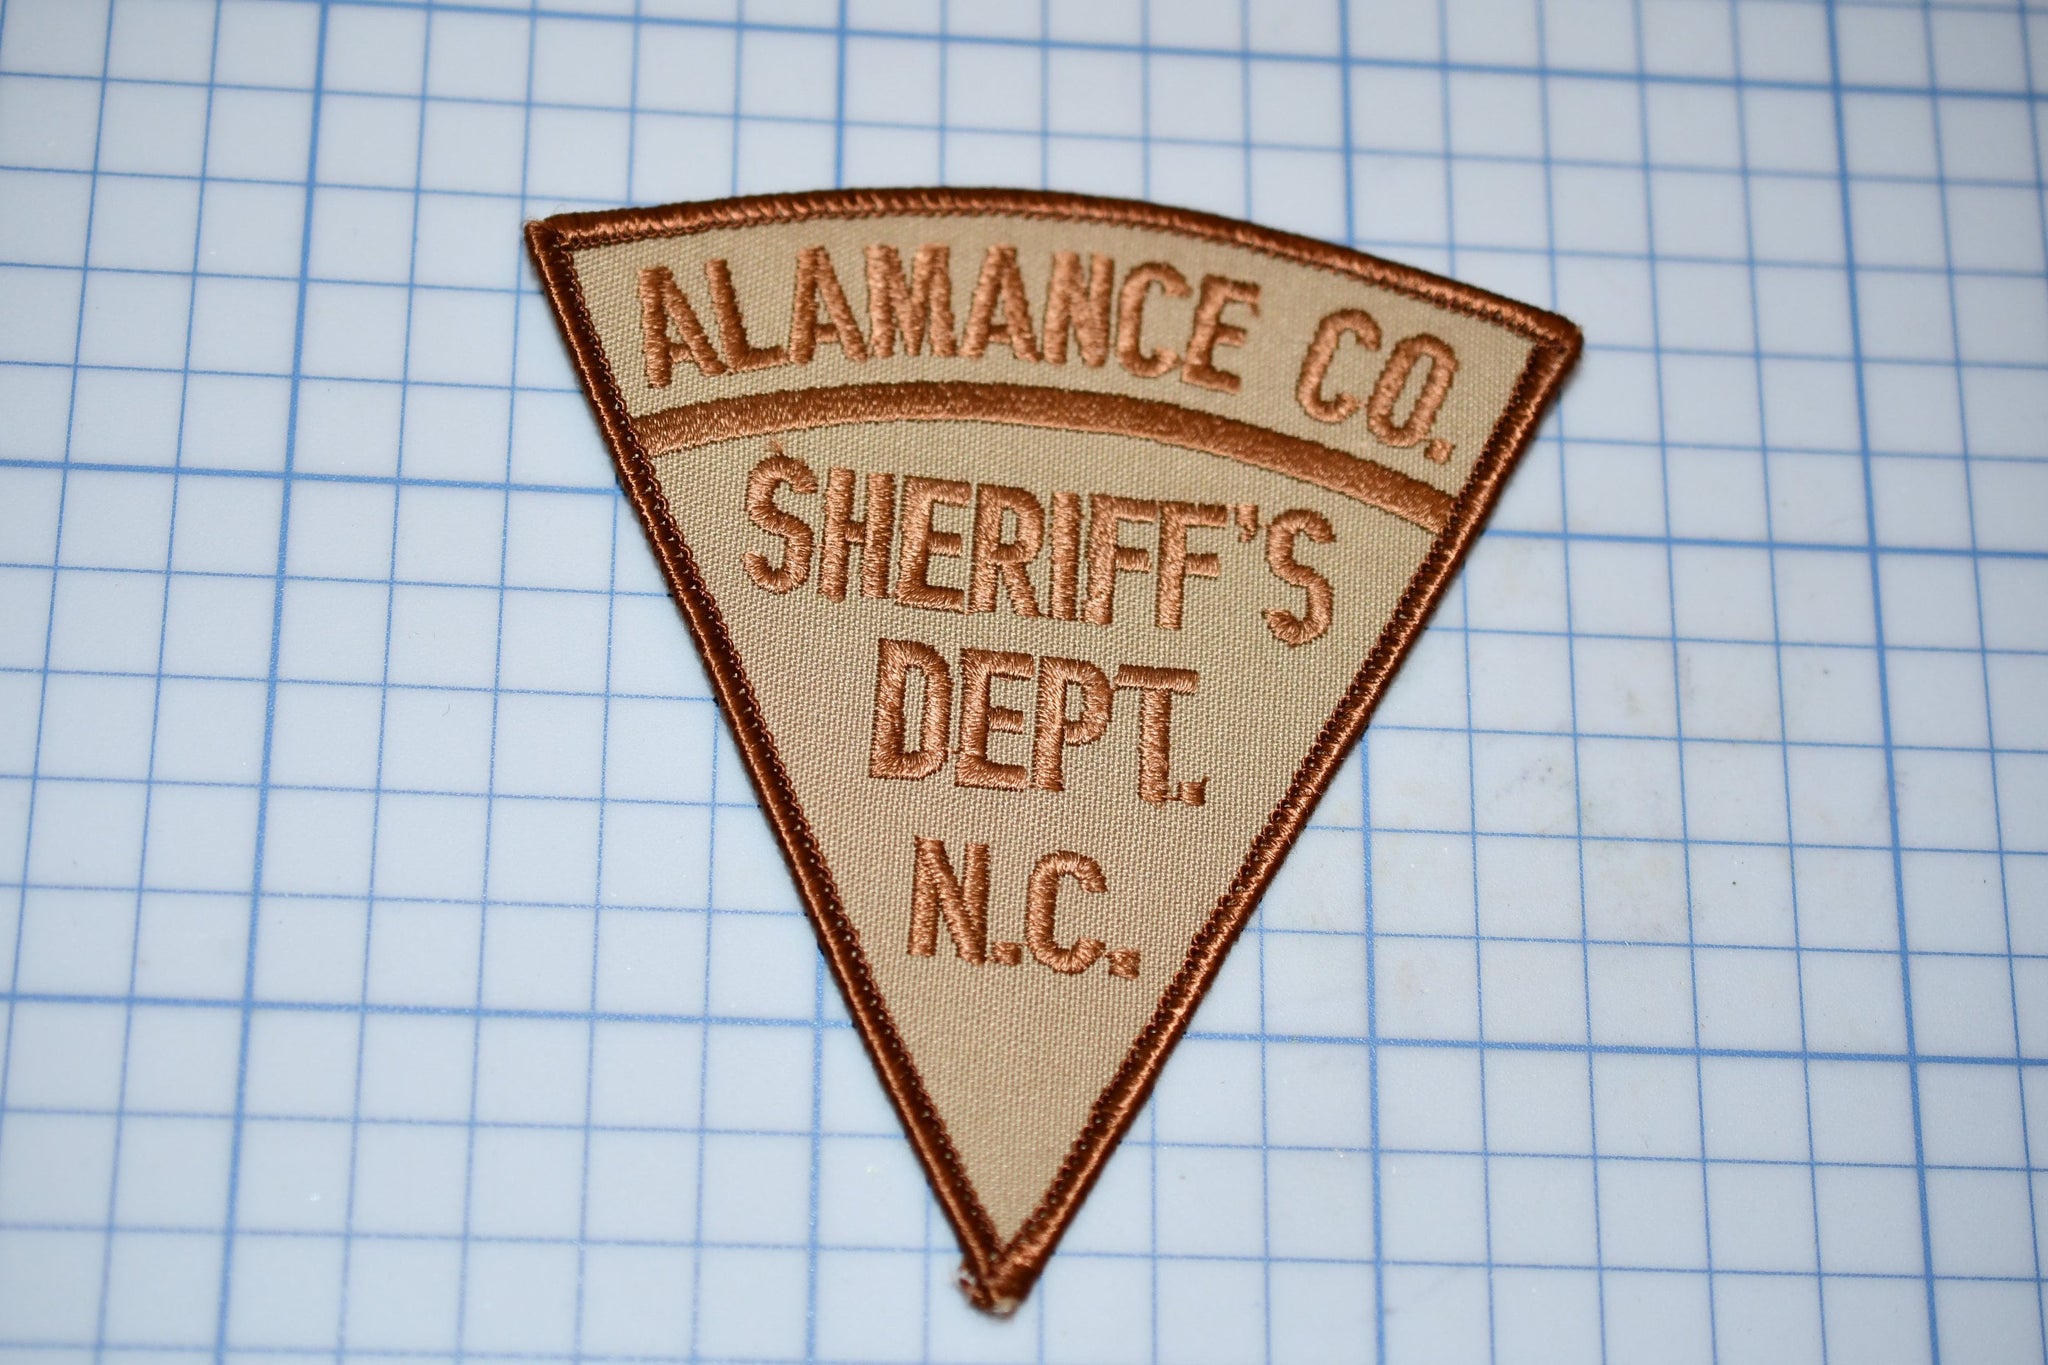 Alamance County North Carolina Sheriff's Department Patch (S4-281)